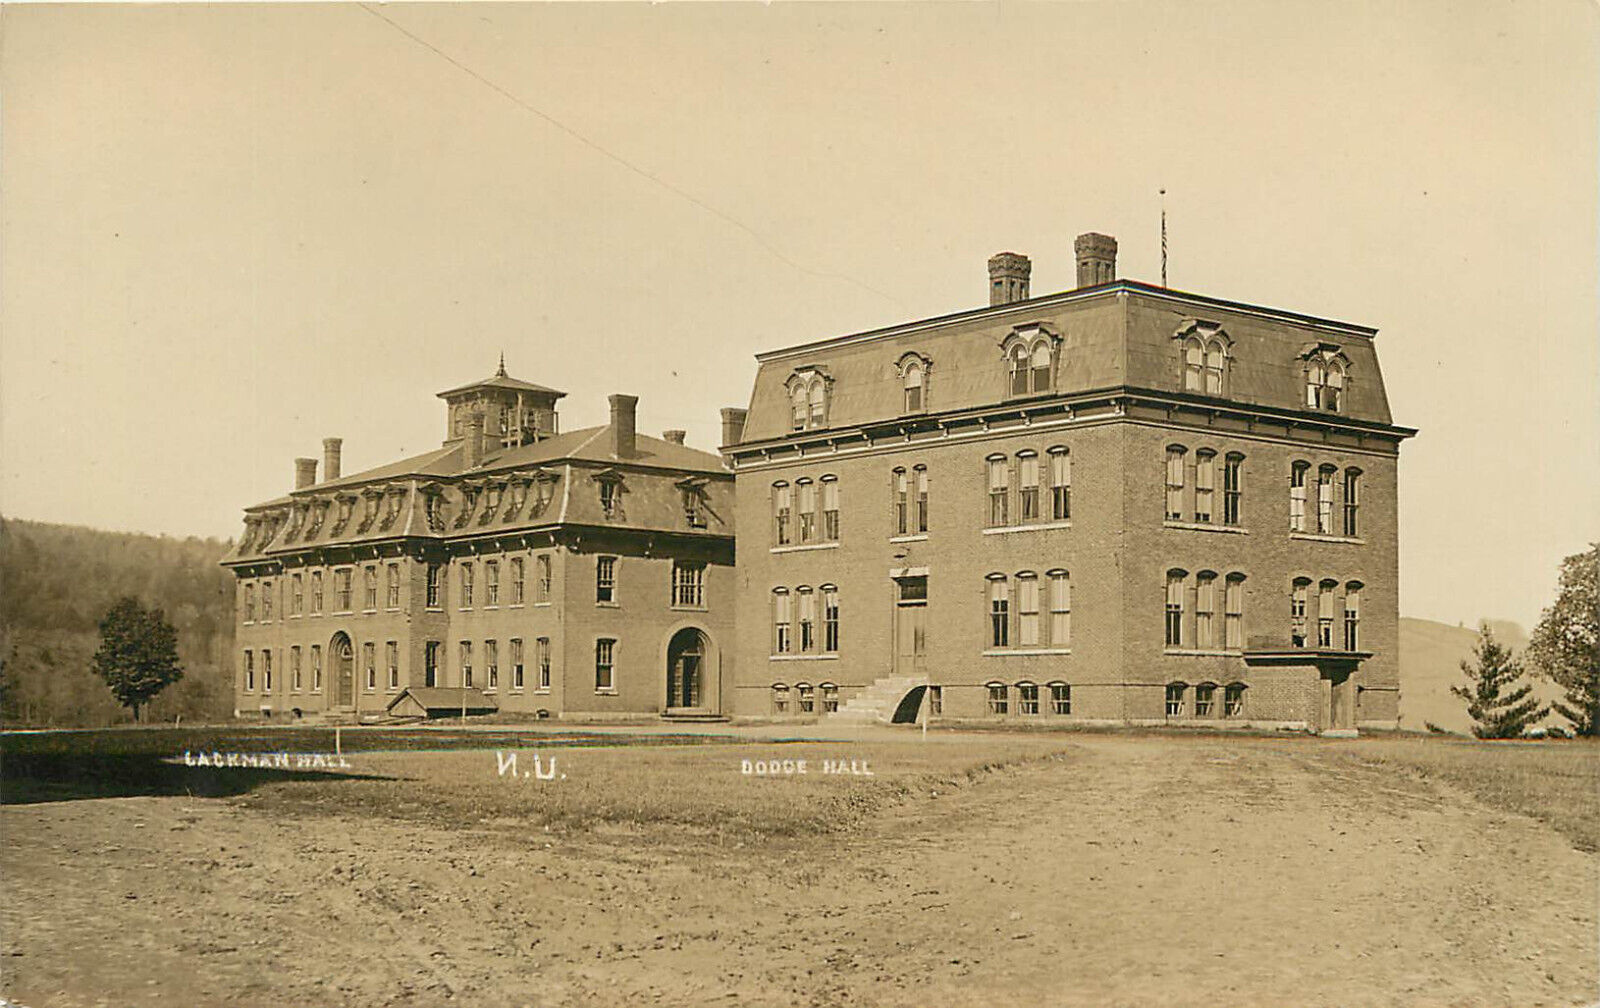 RPPC Postcard Lackman Hall Dodge Hall N.U. Northeastern University Boston MA